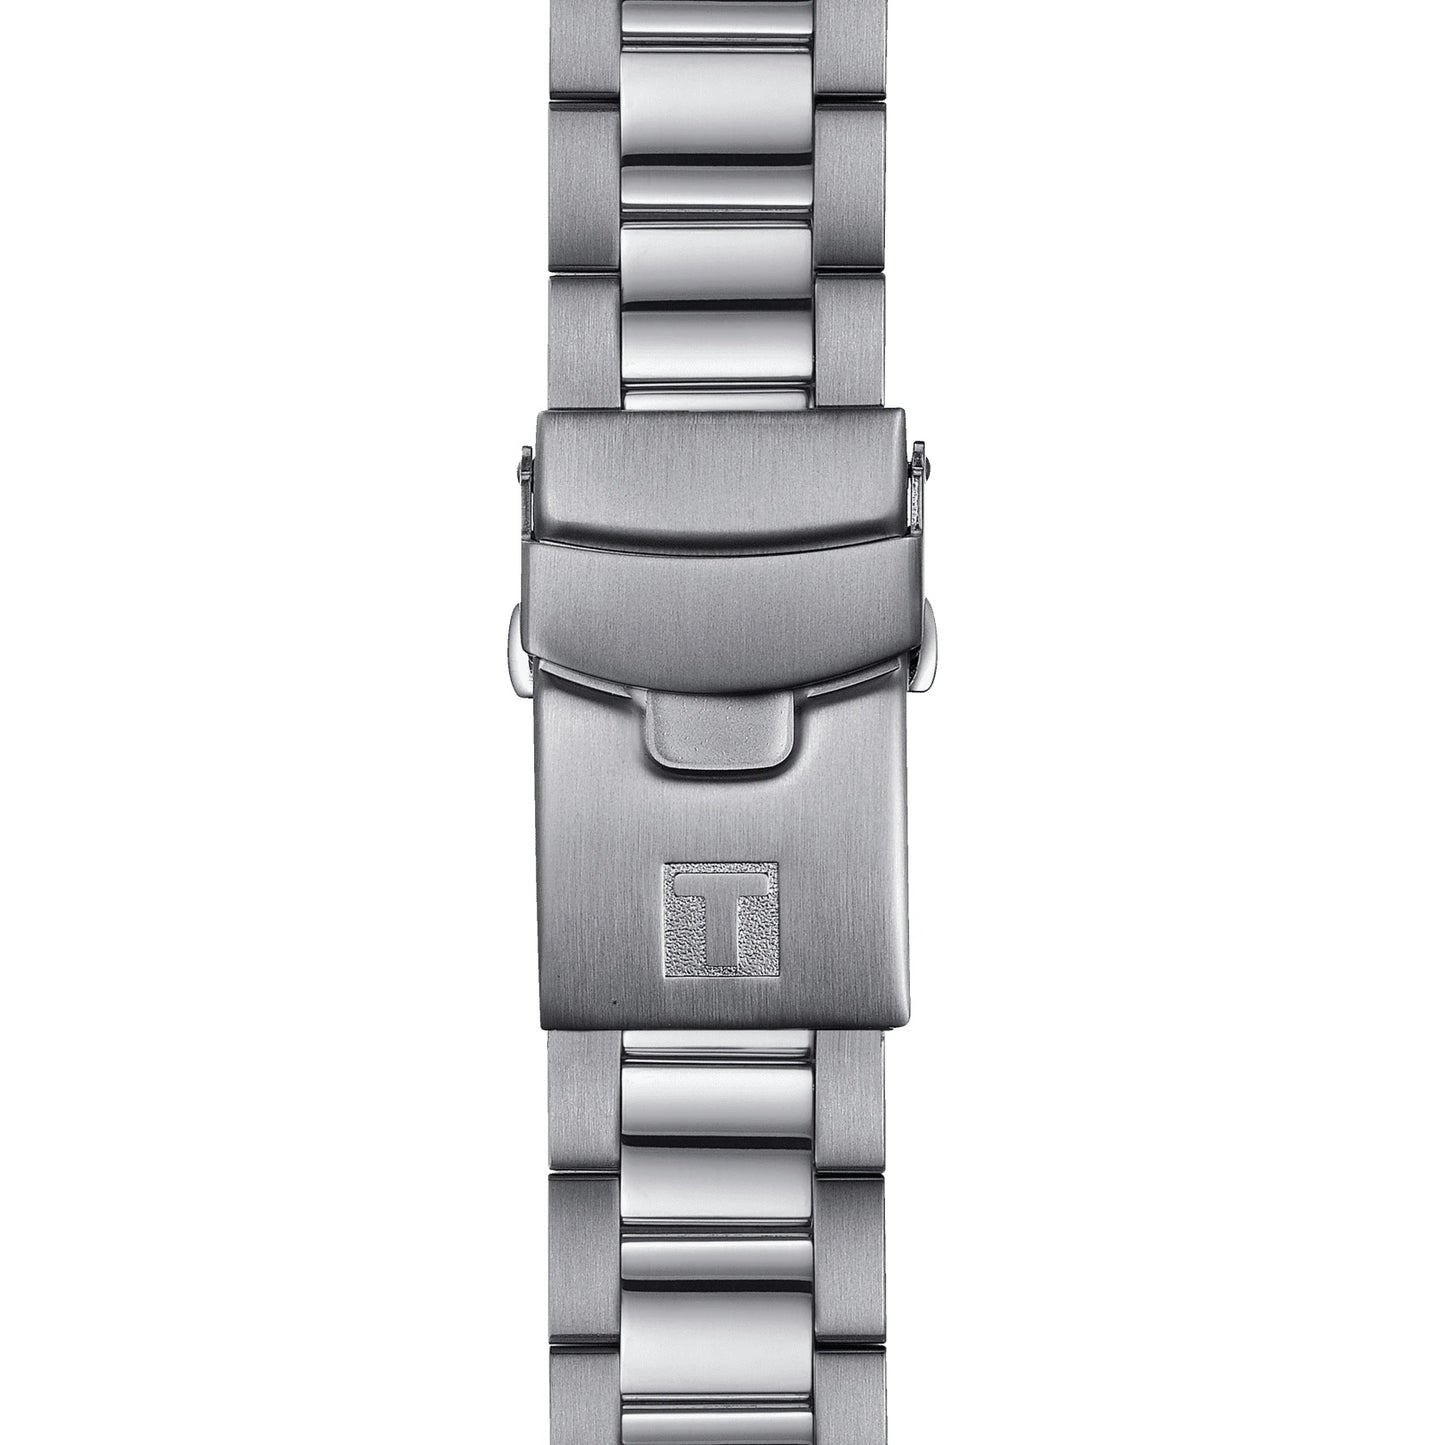 Tissot Seastar 1000 Powermatic 80 - Watches - Mens